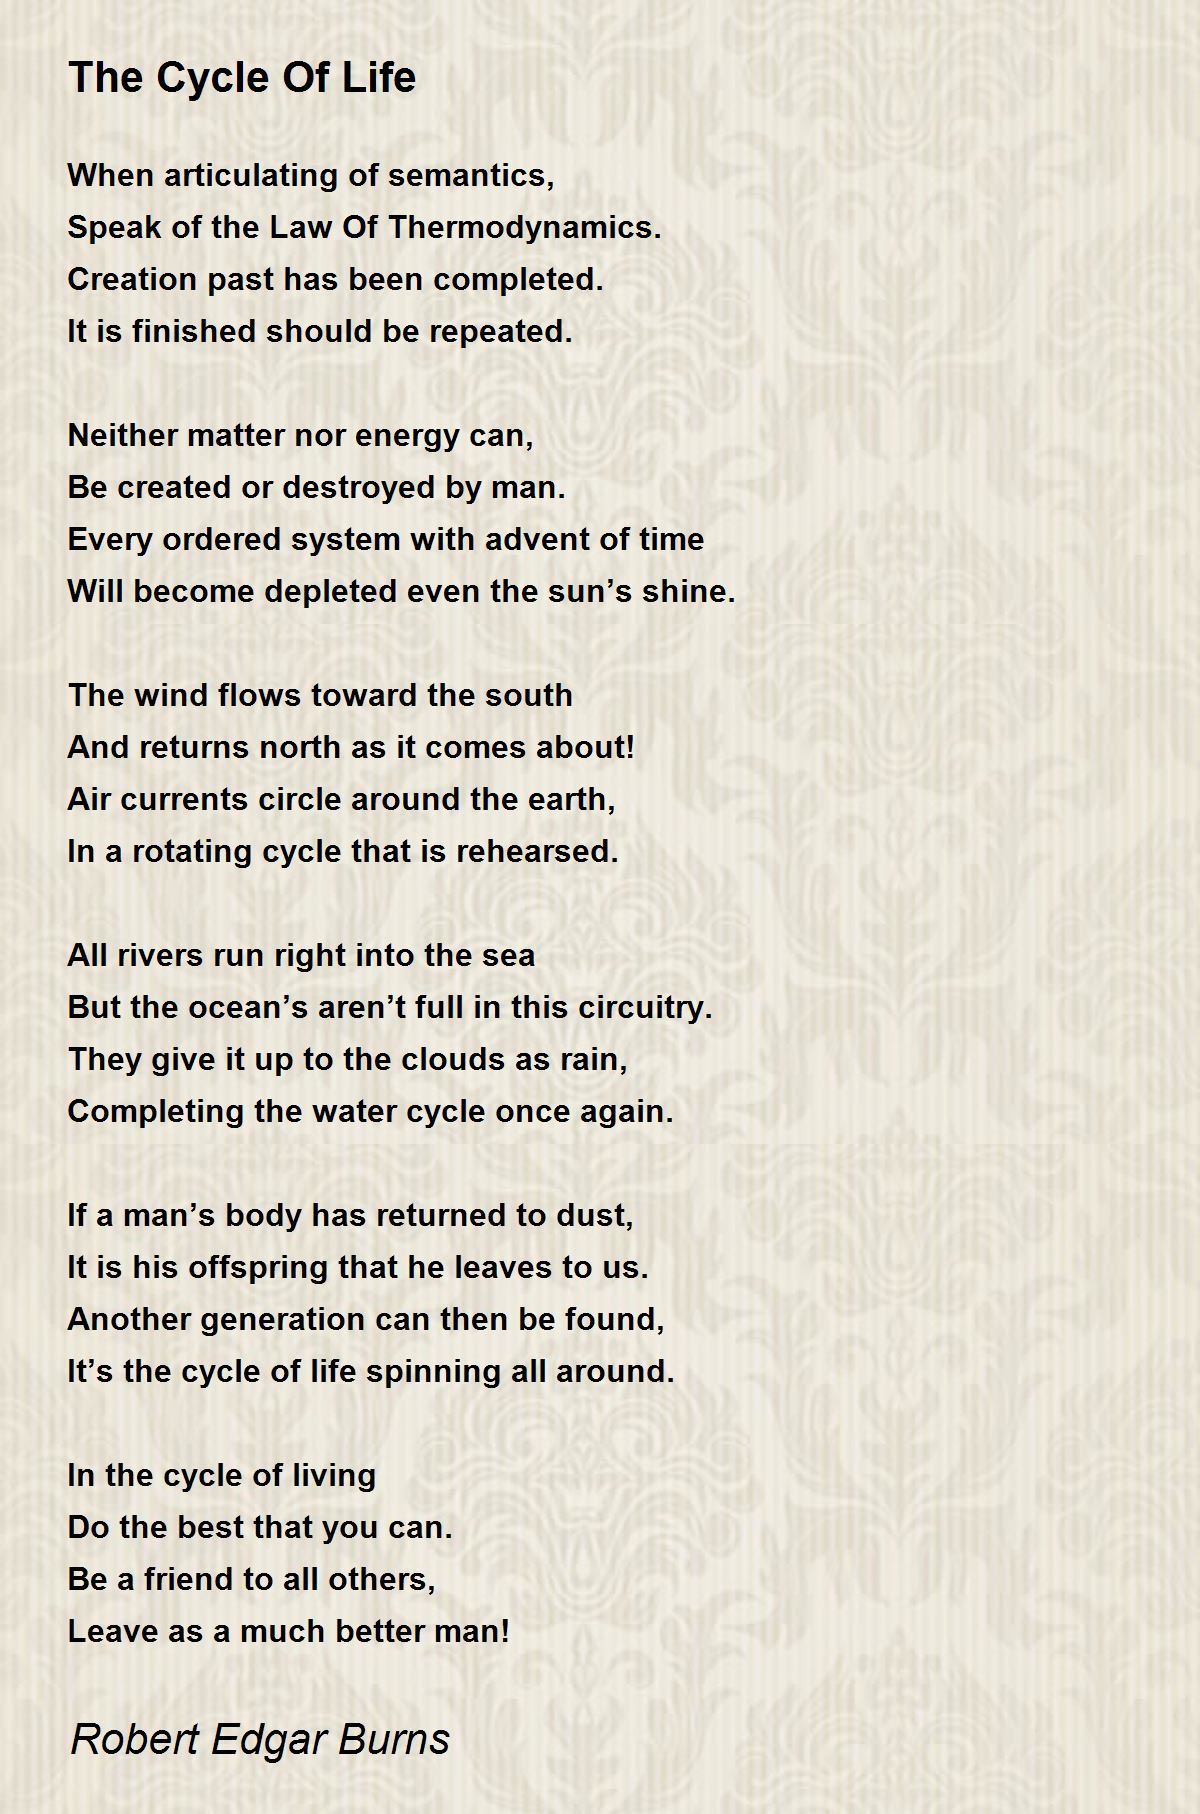 The Cycle Of Life Poem by Robert Edgar Burns - Poem Hunter